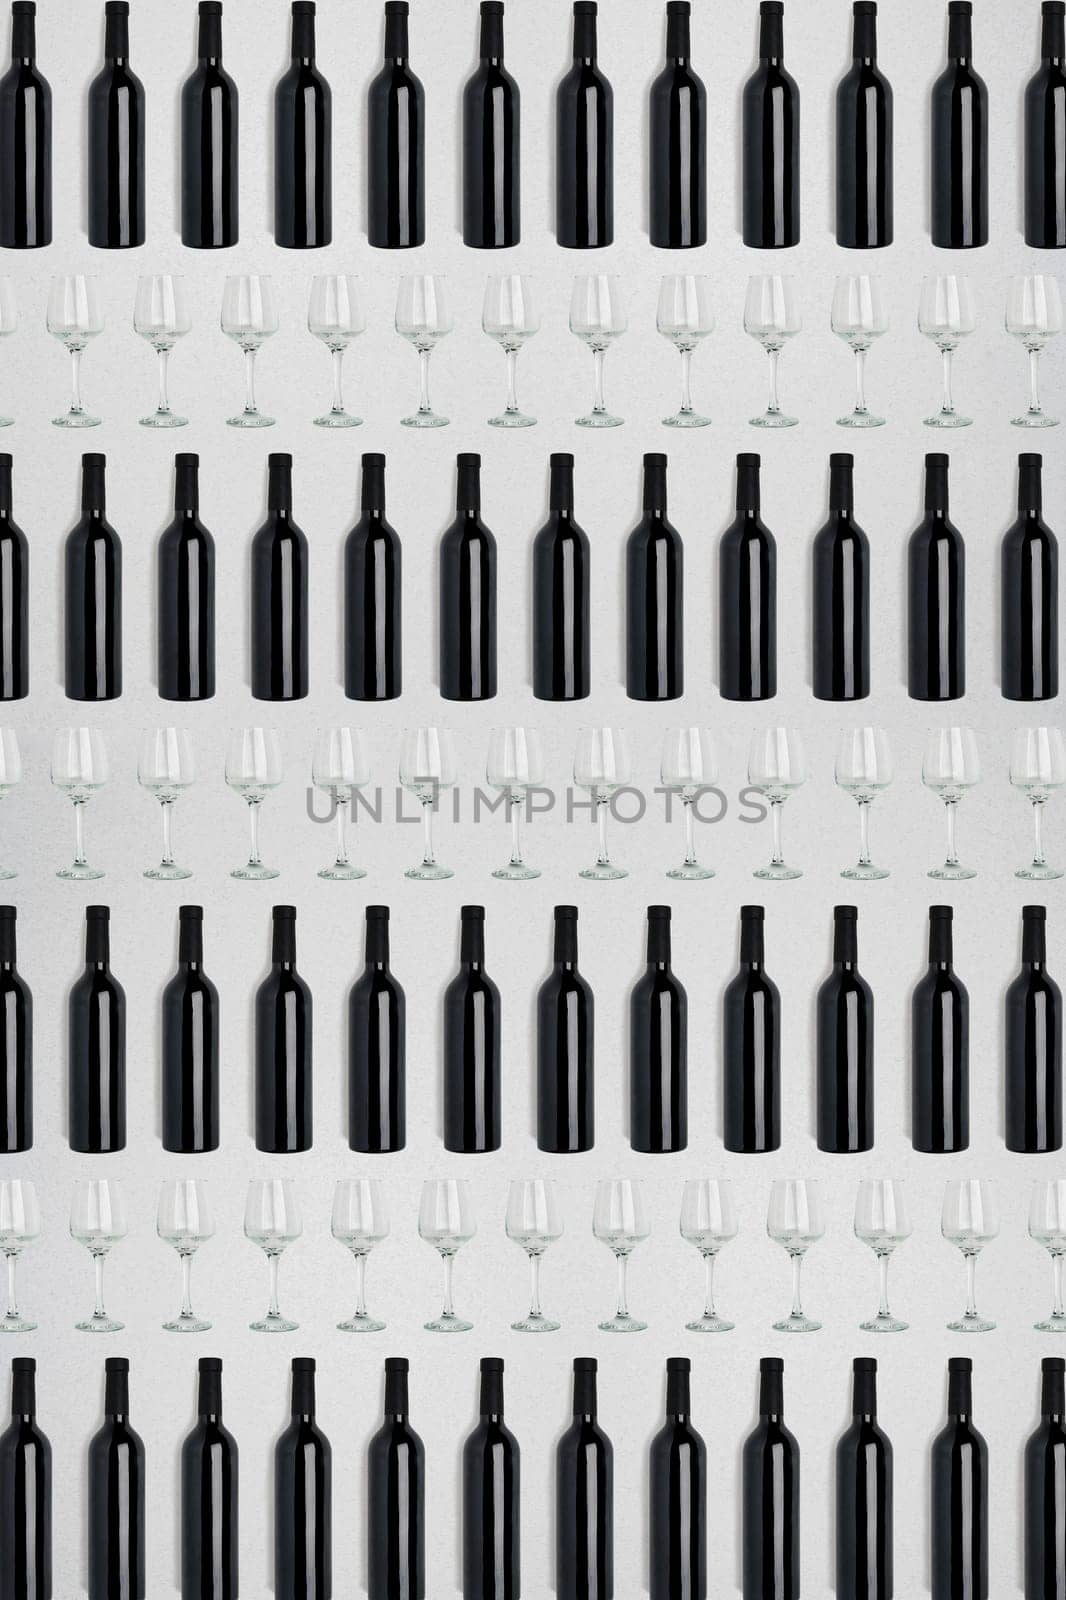 Dark wine bottles and glasses. Creative dark and textured abstract background. by nazarovsergey